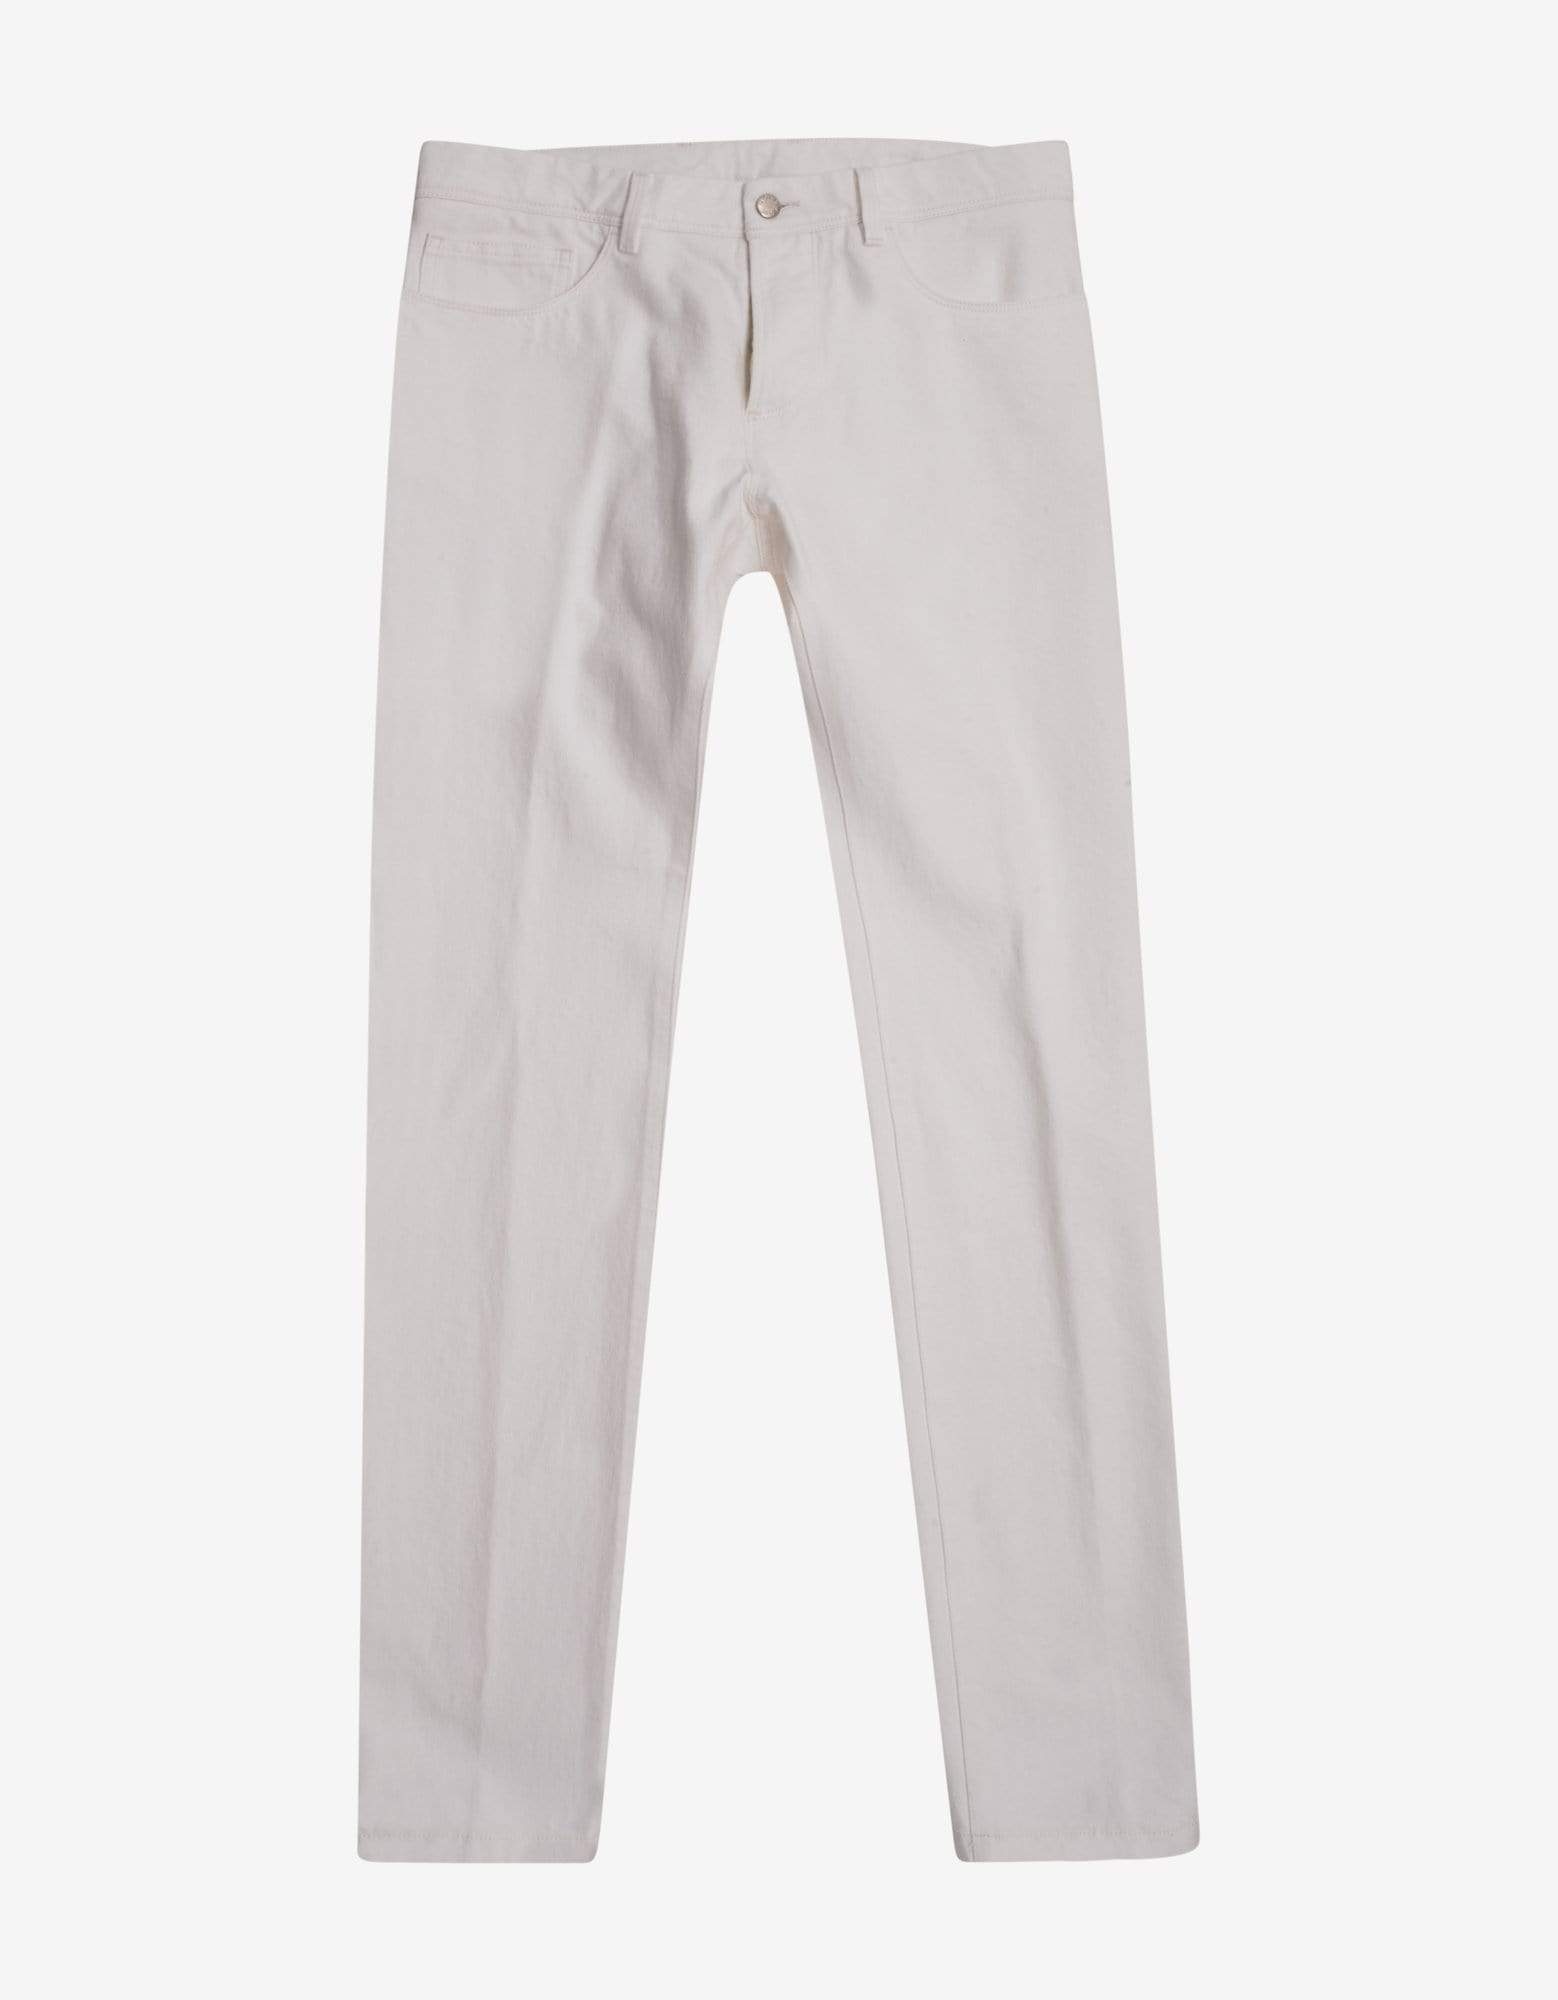 Off-White Denim Jeans - 1